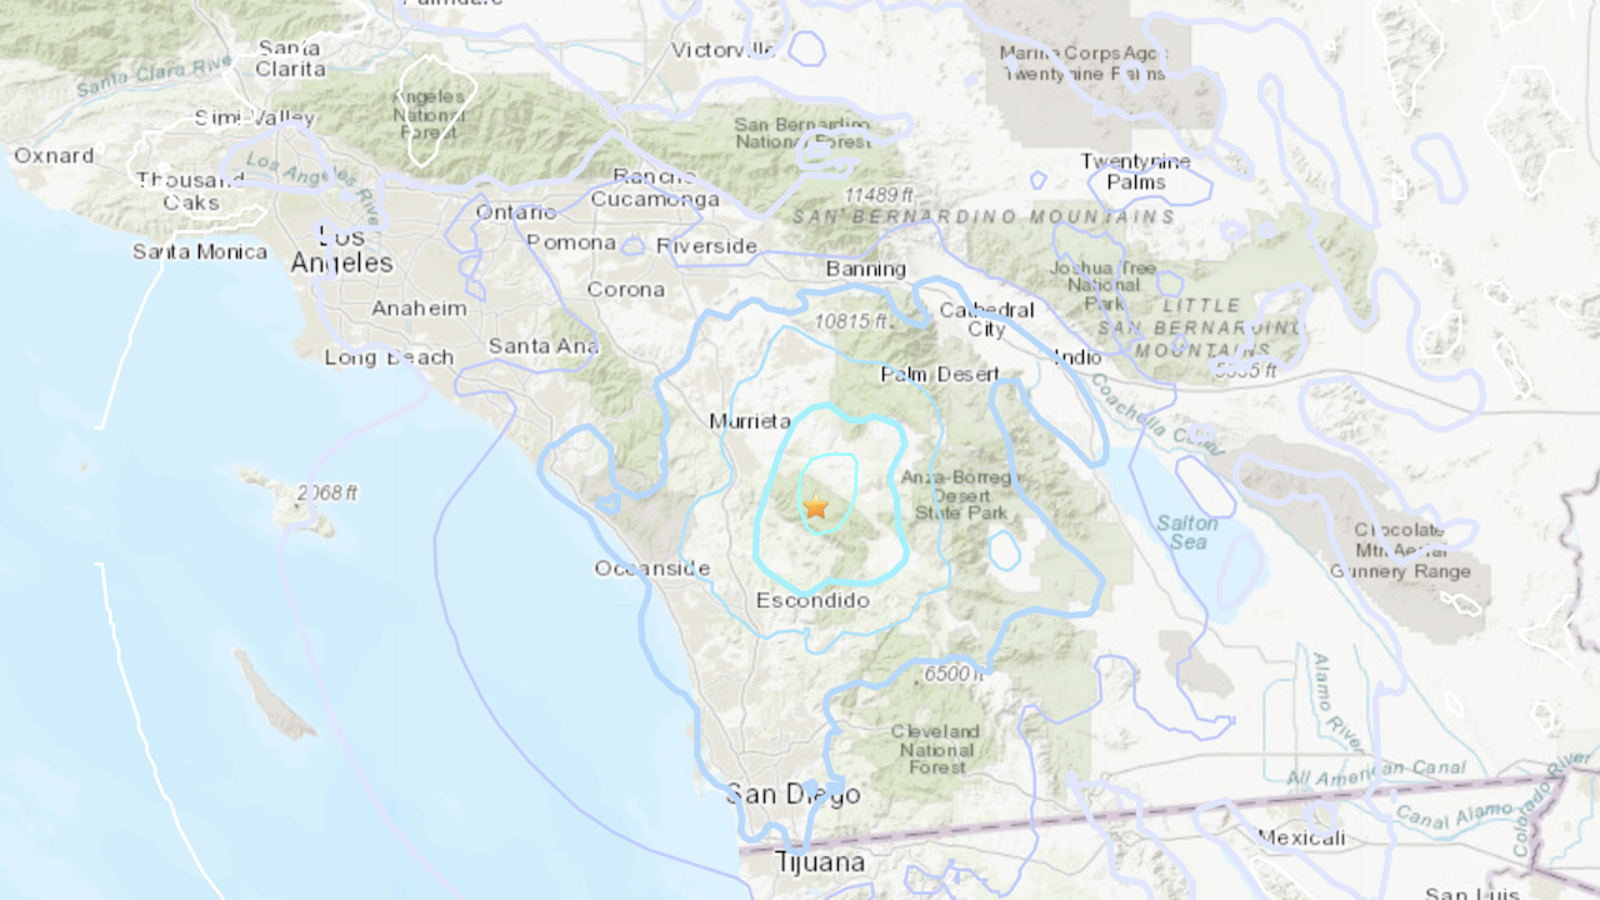 quake map